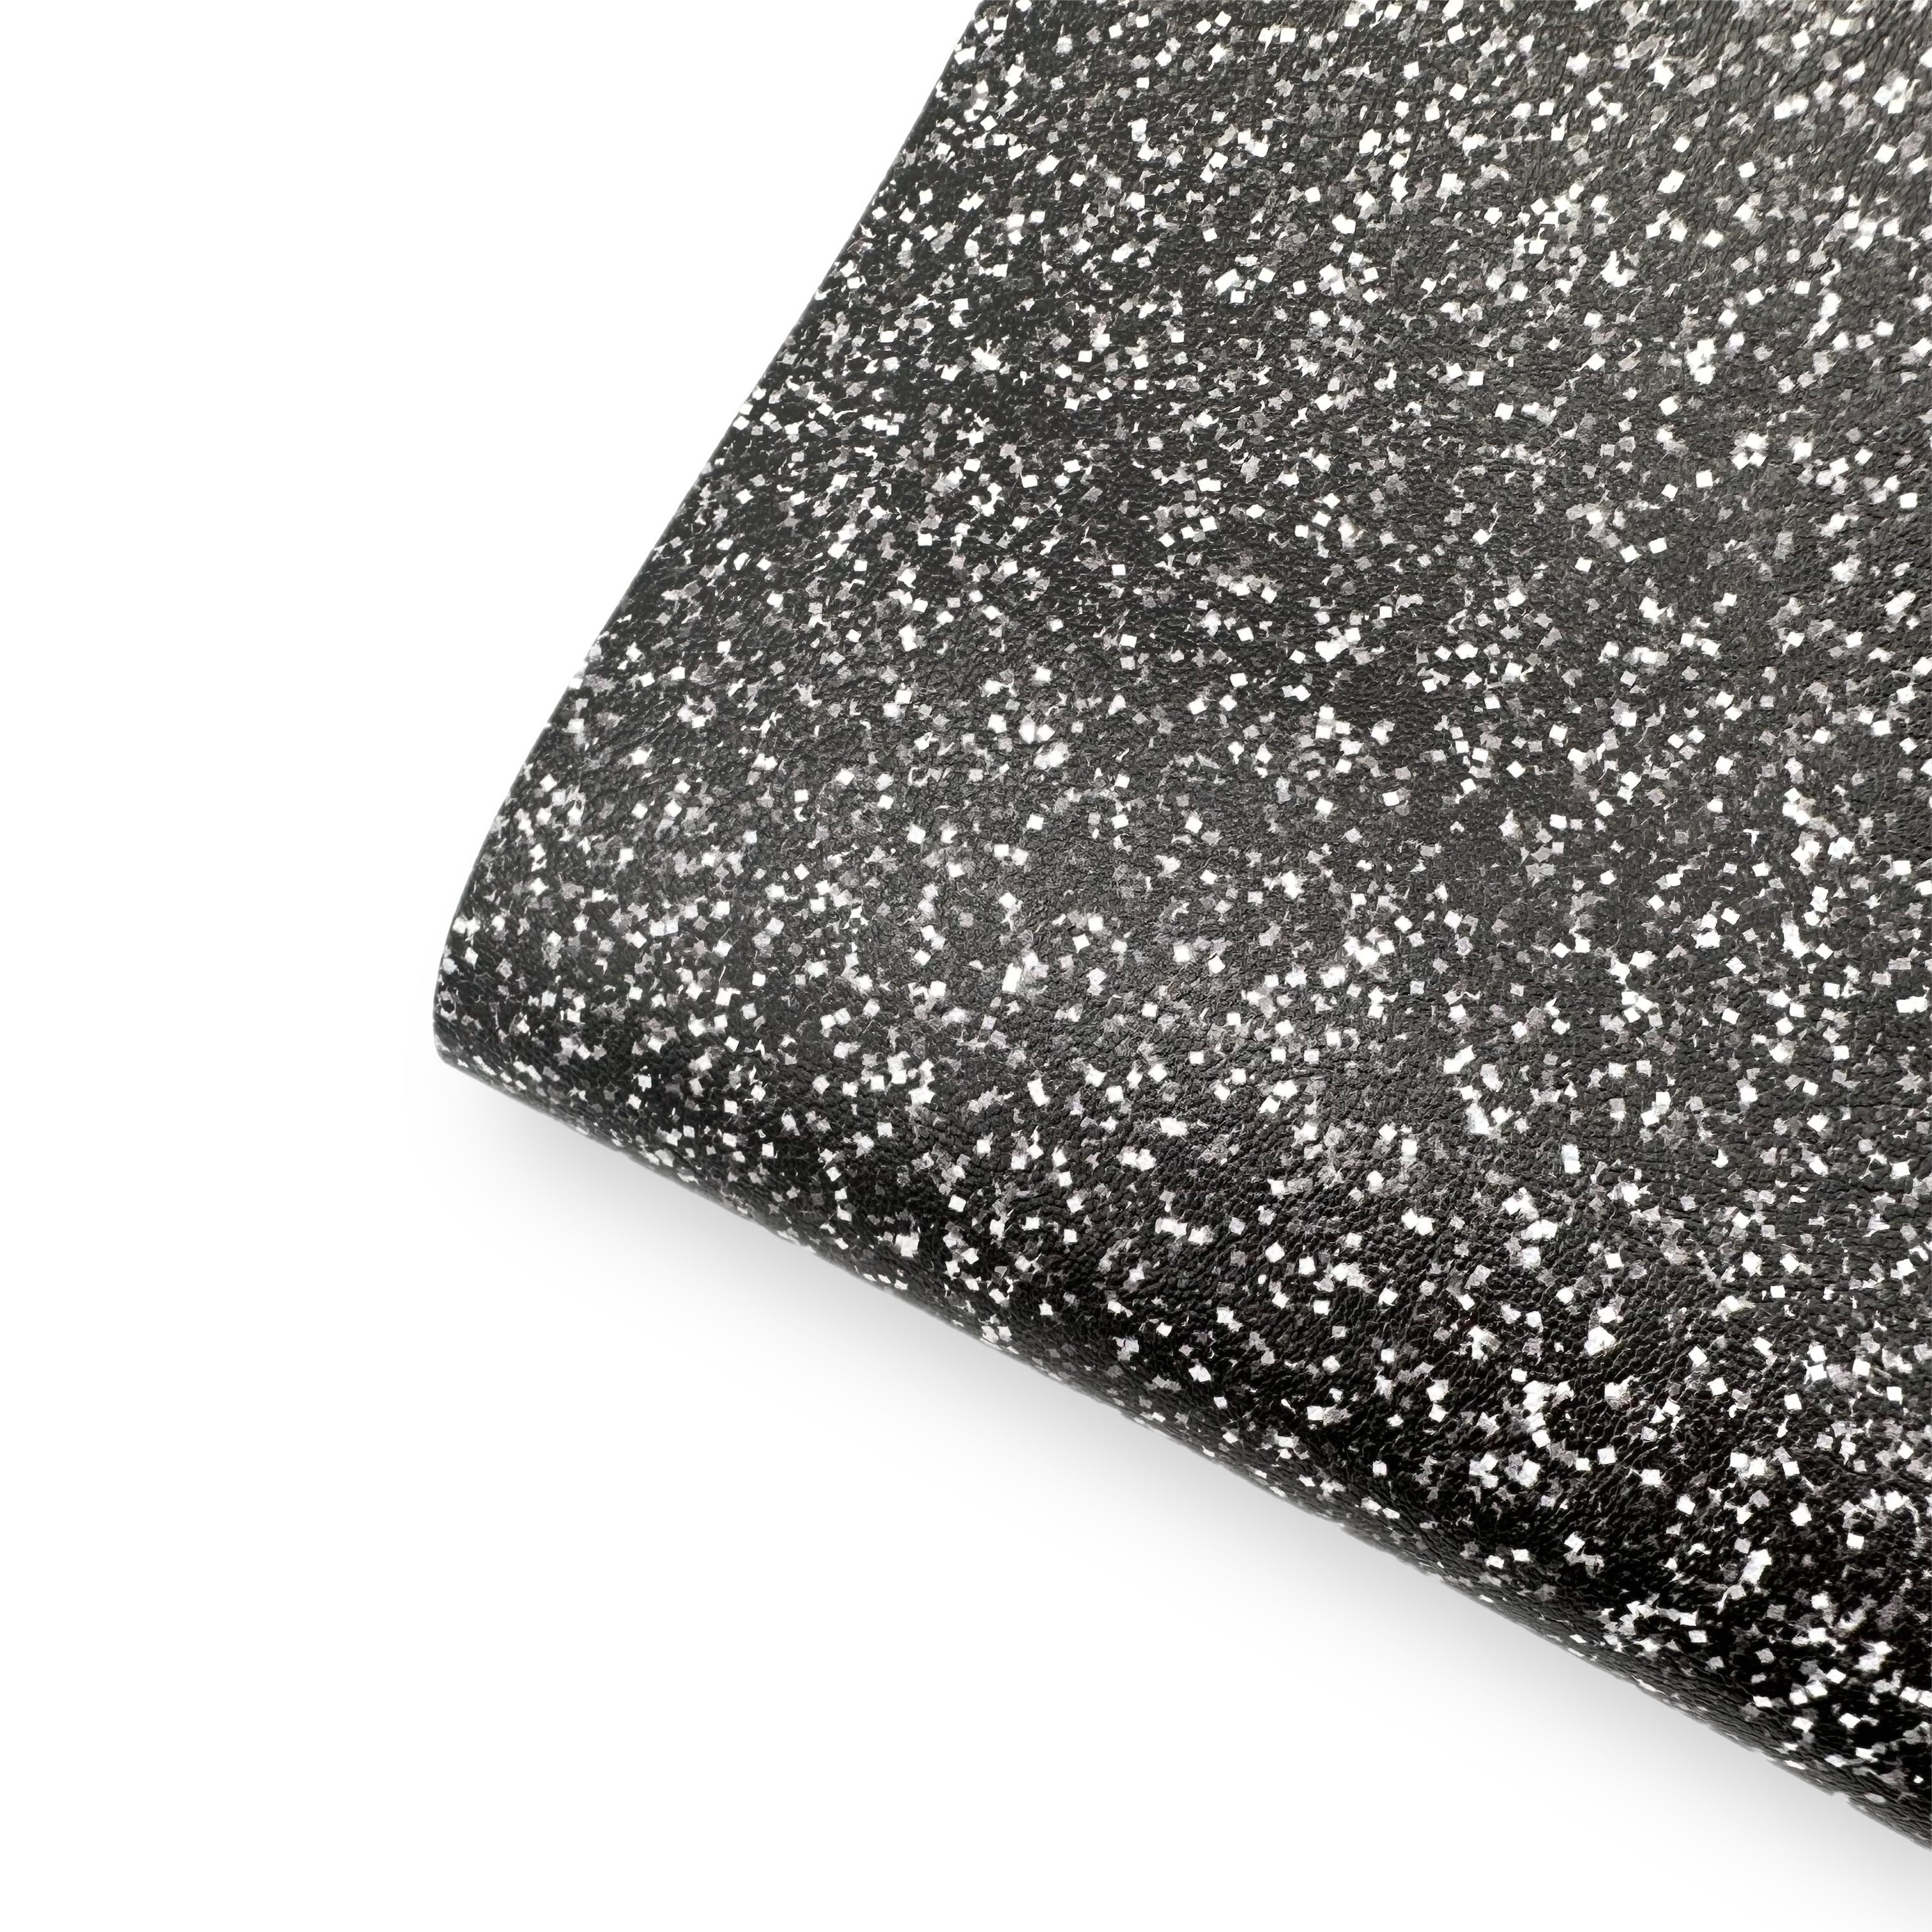 Jet Black Faux Glitter Effect Premium Faux Leather Fabric Sheets